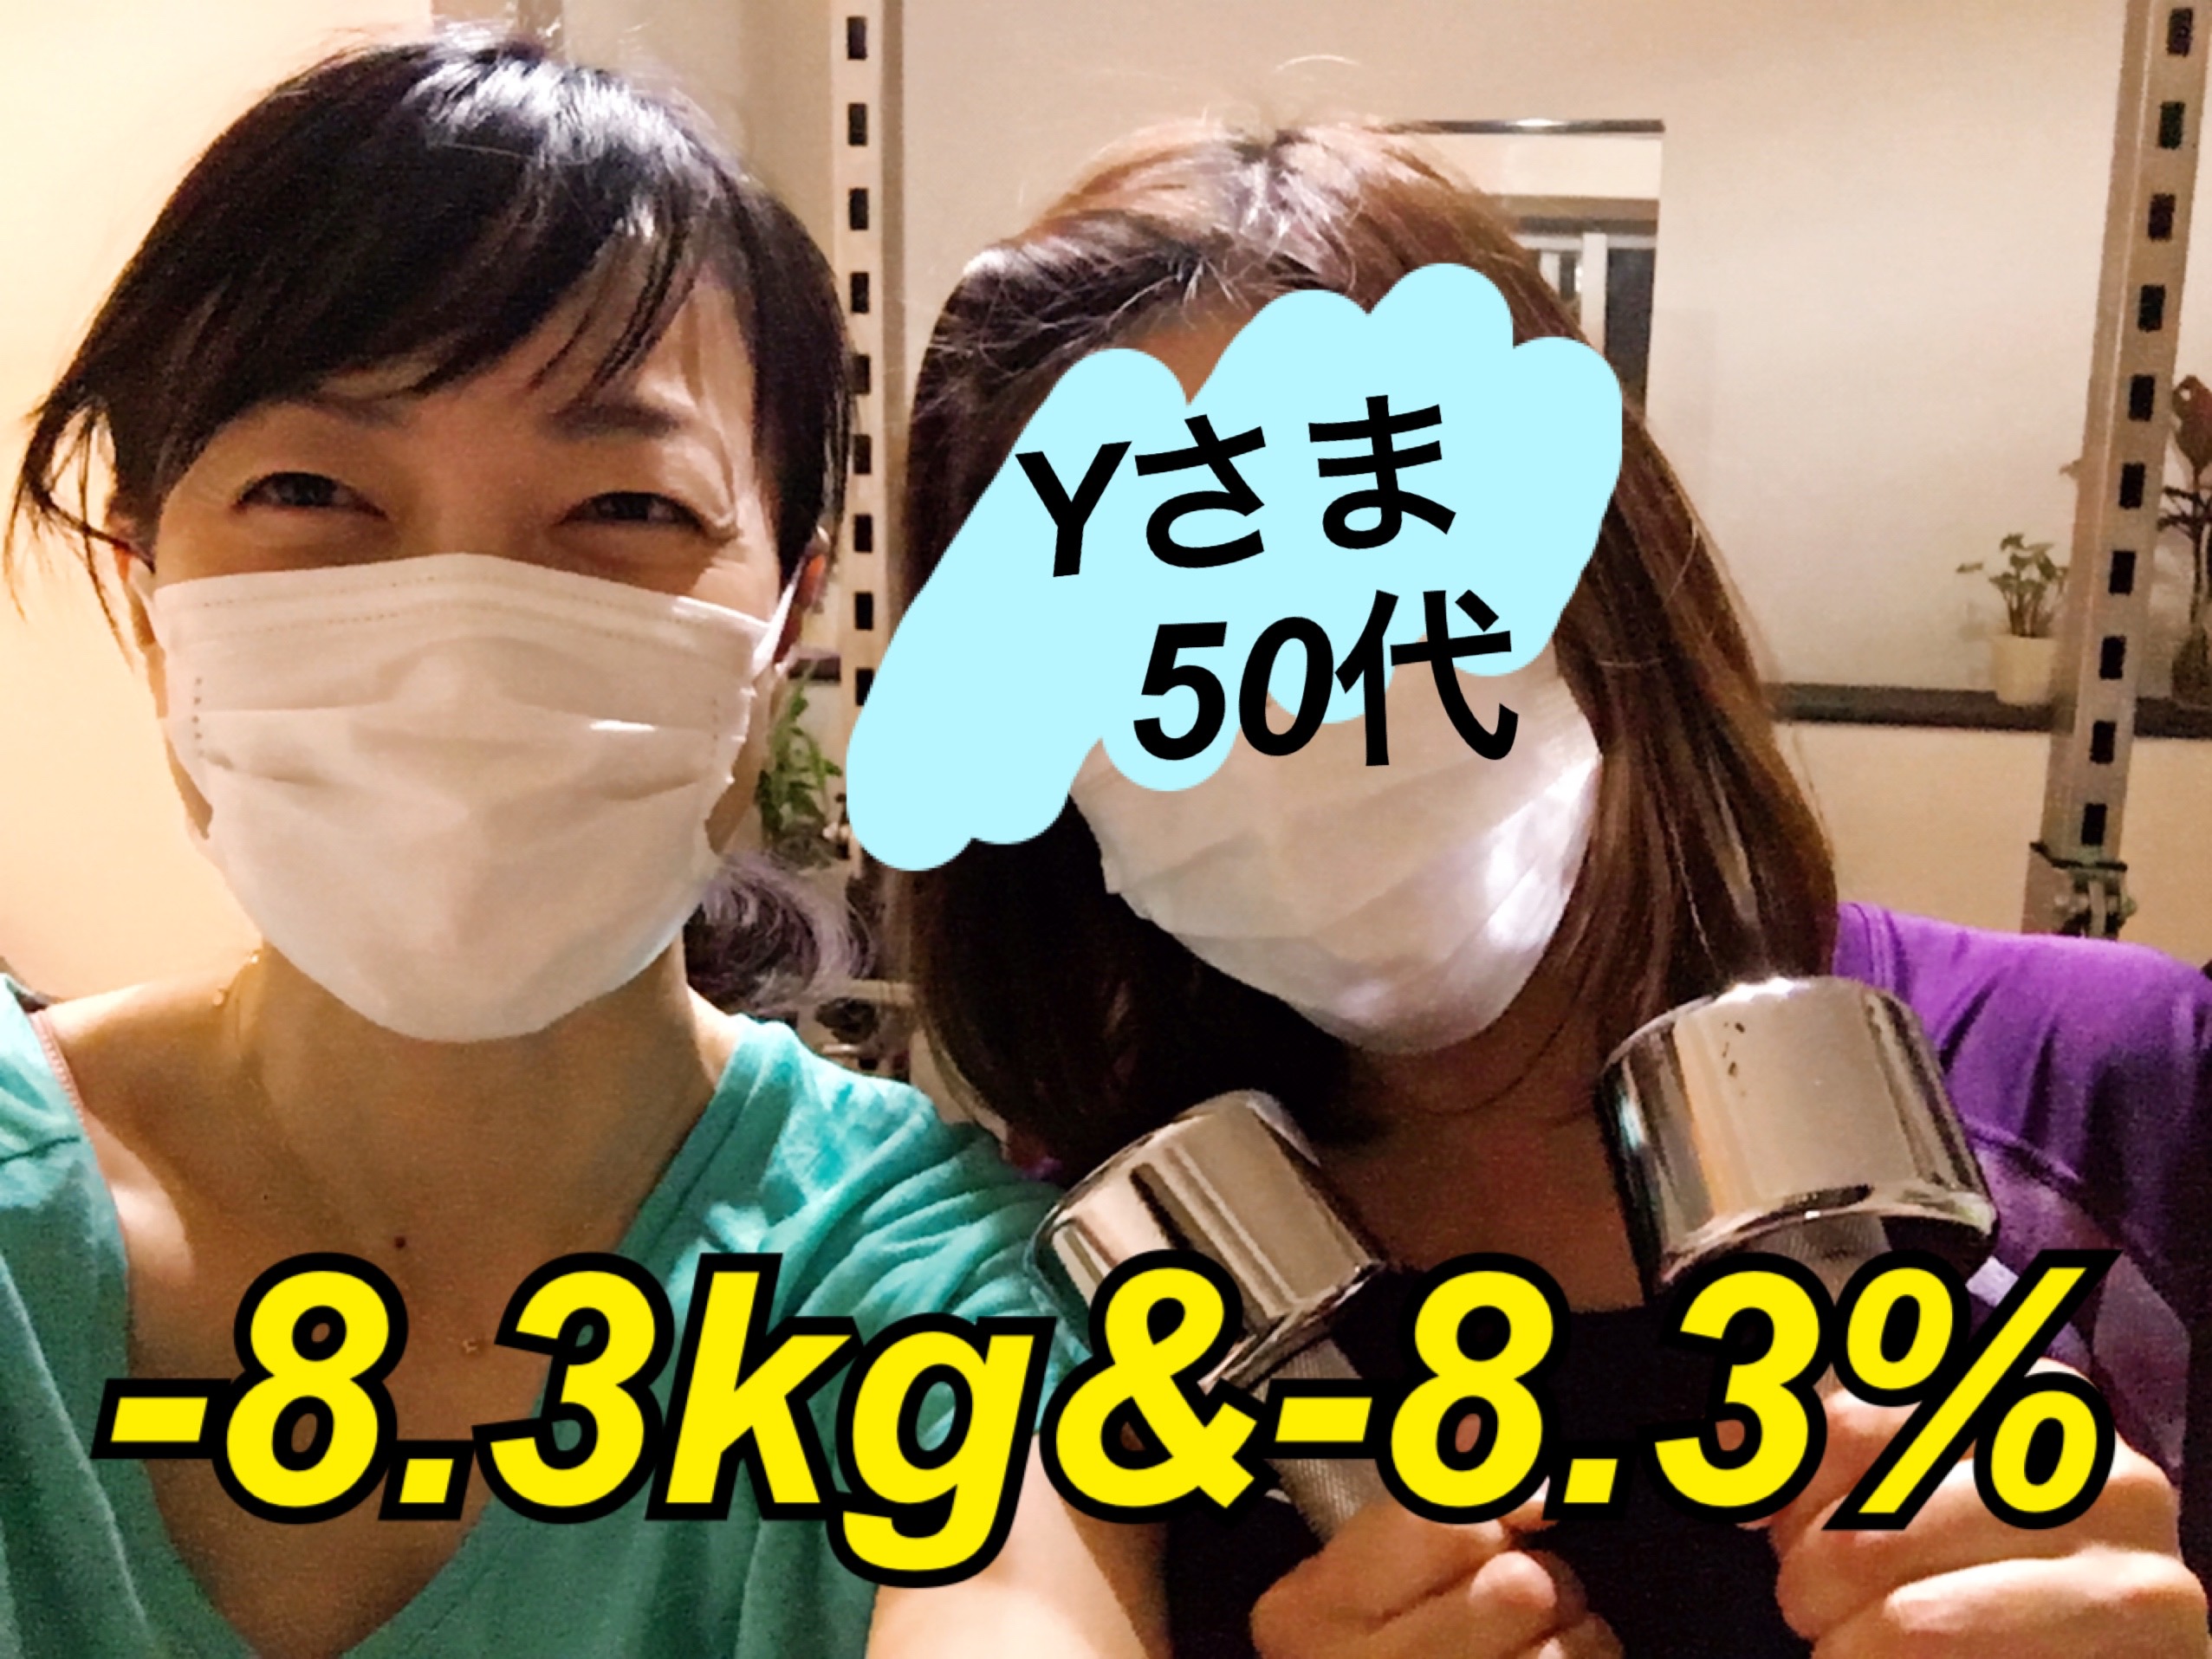 oomori_diet_bodymake_yaseta_8kg